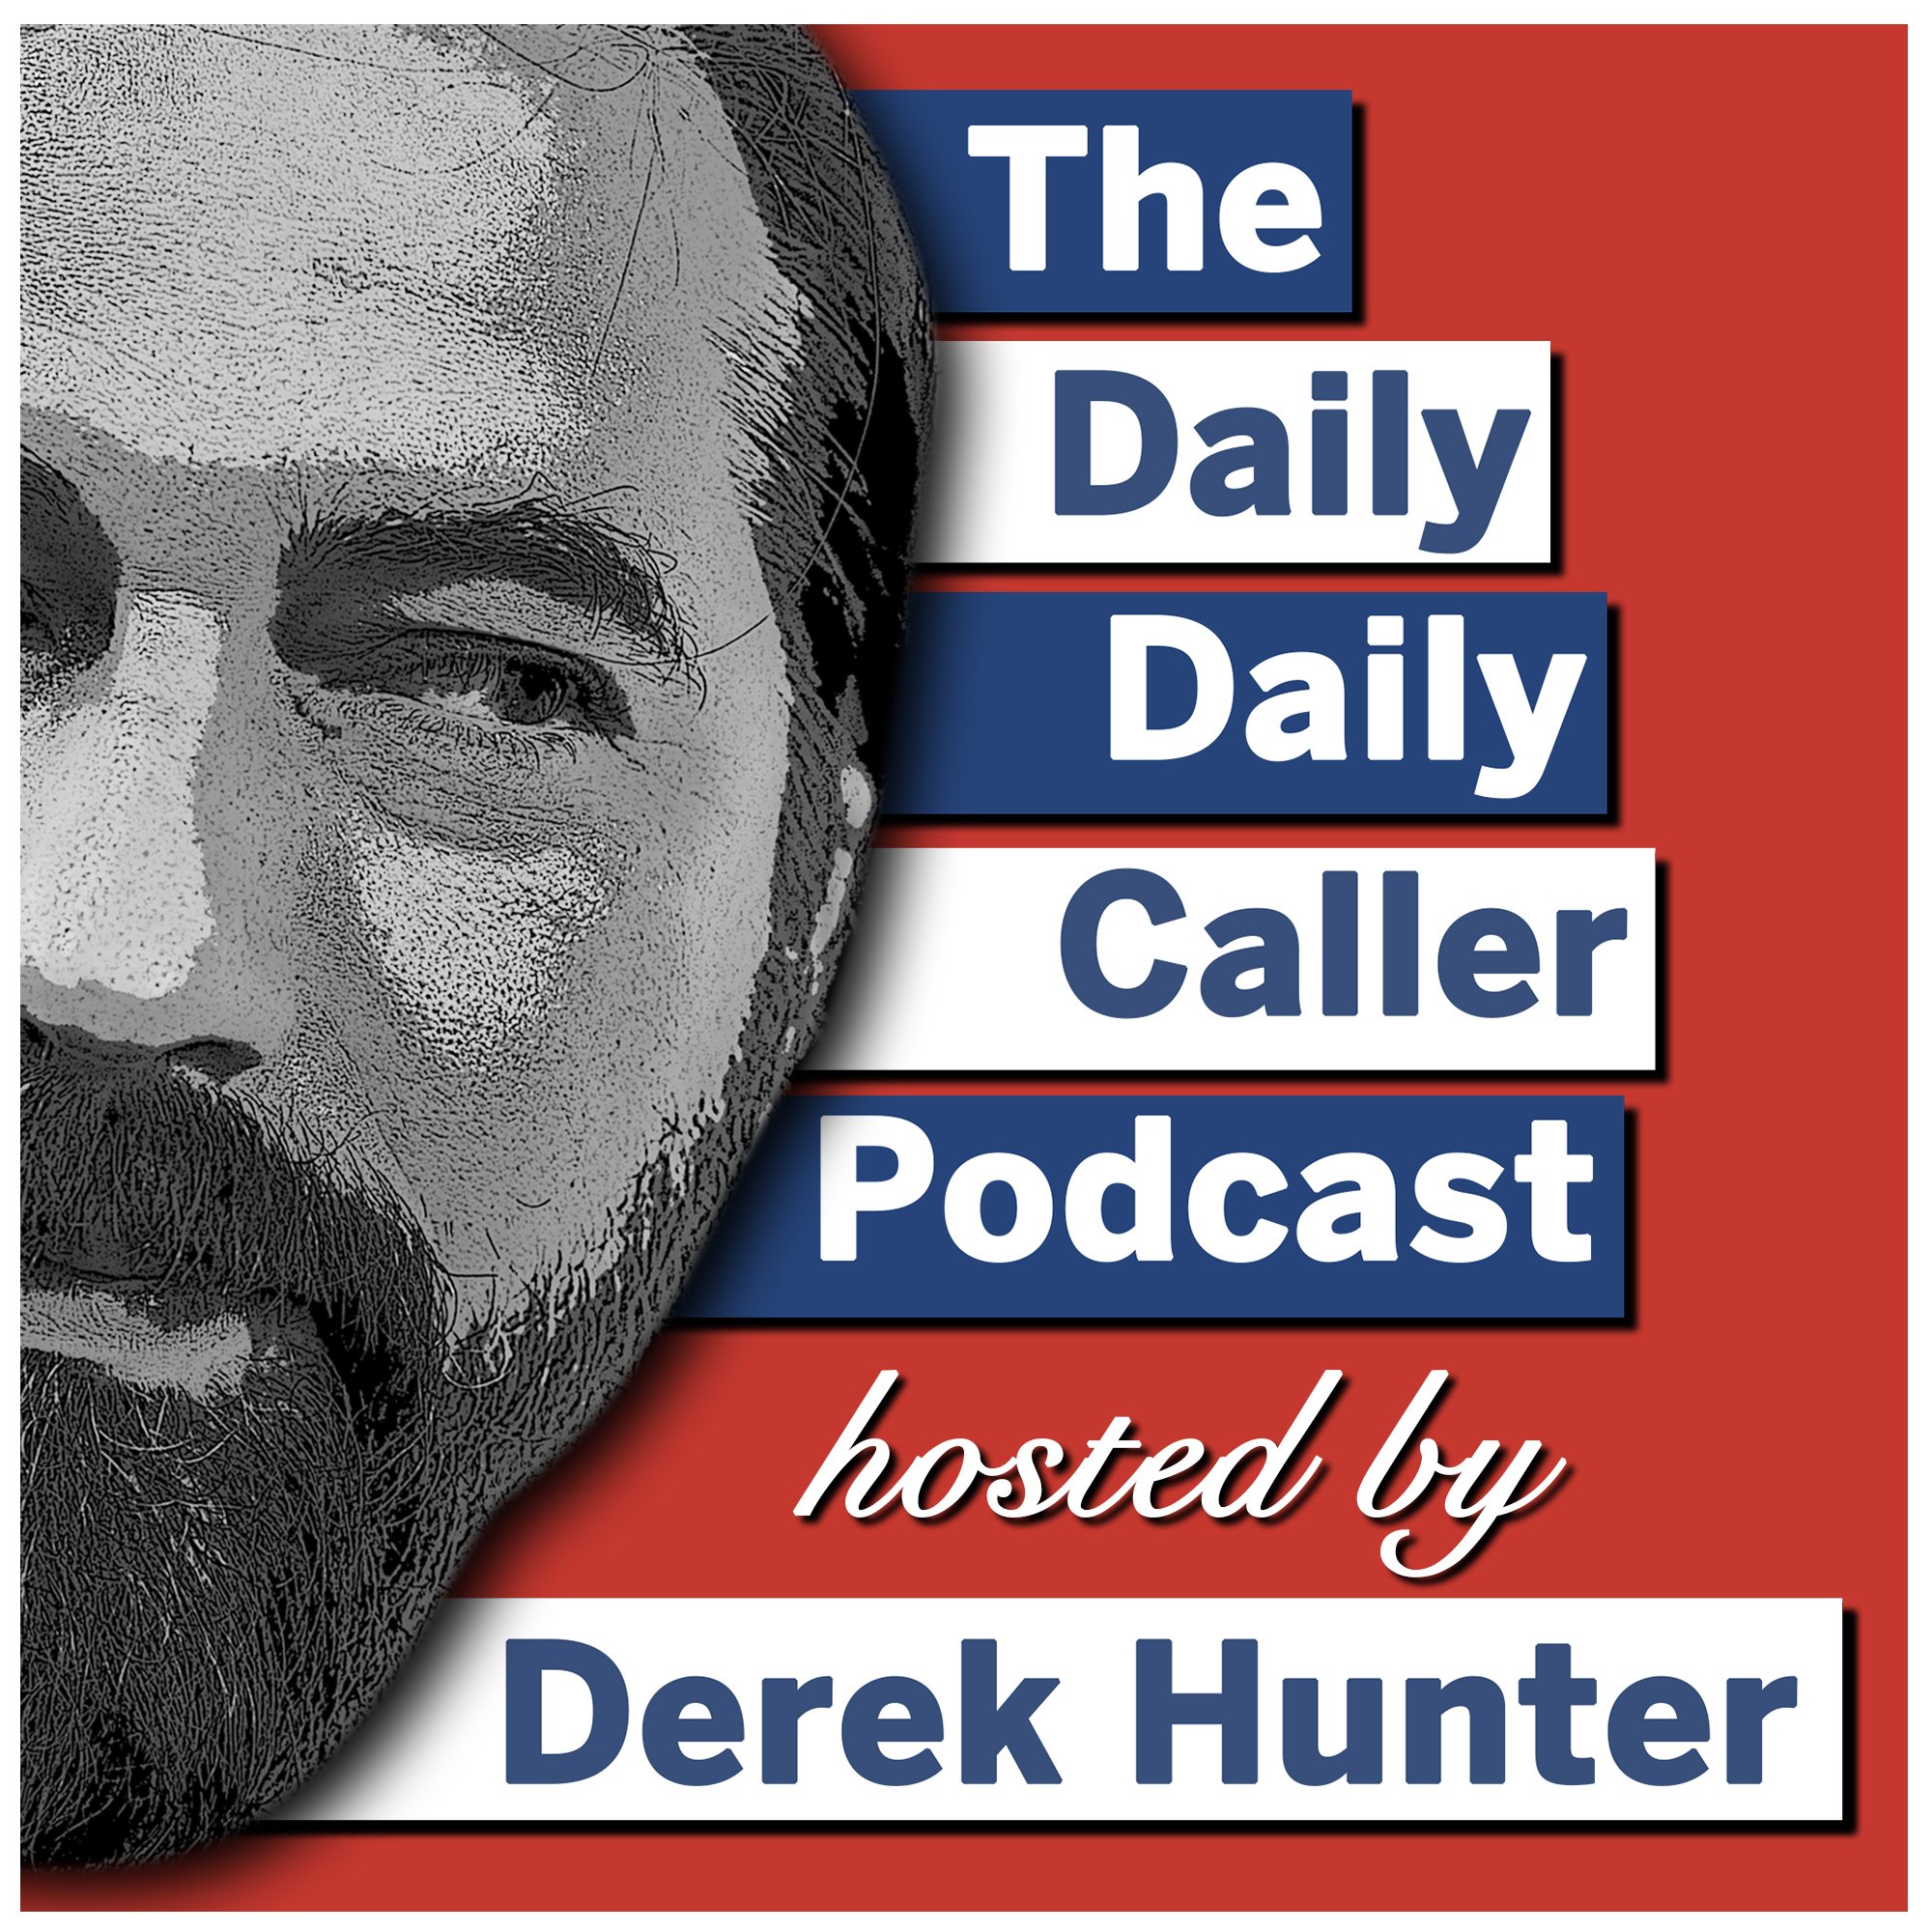 The Daily Daily Caller Podcast with Derek Hunter | Listen via Stitcher ...